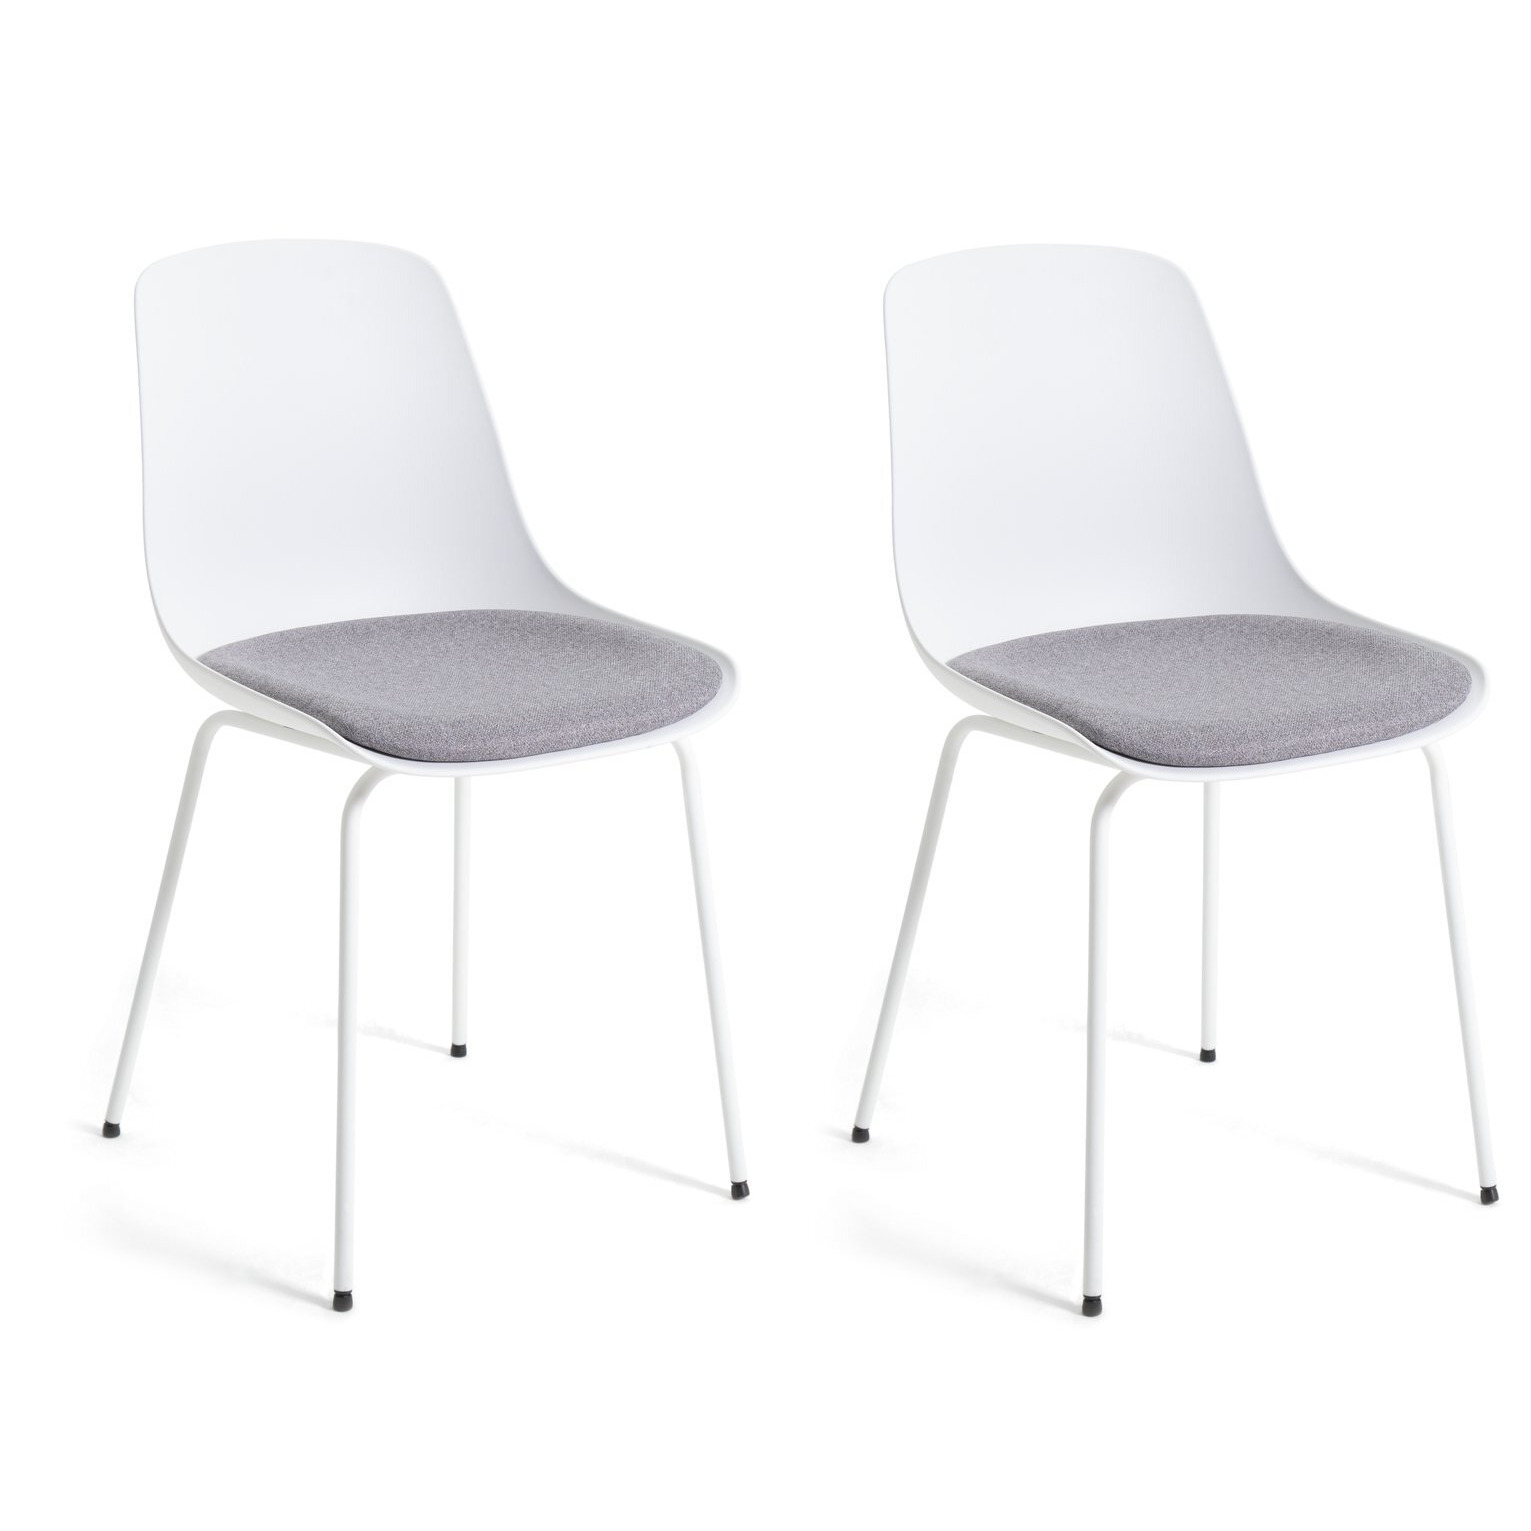 Habitat Eva Pair of Dining Chairs - White - image 1